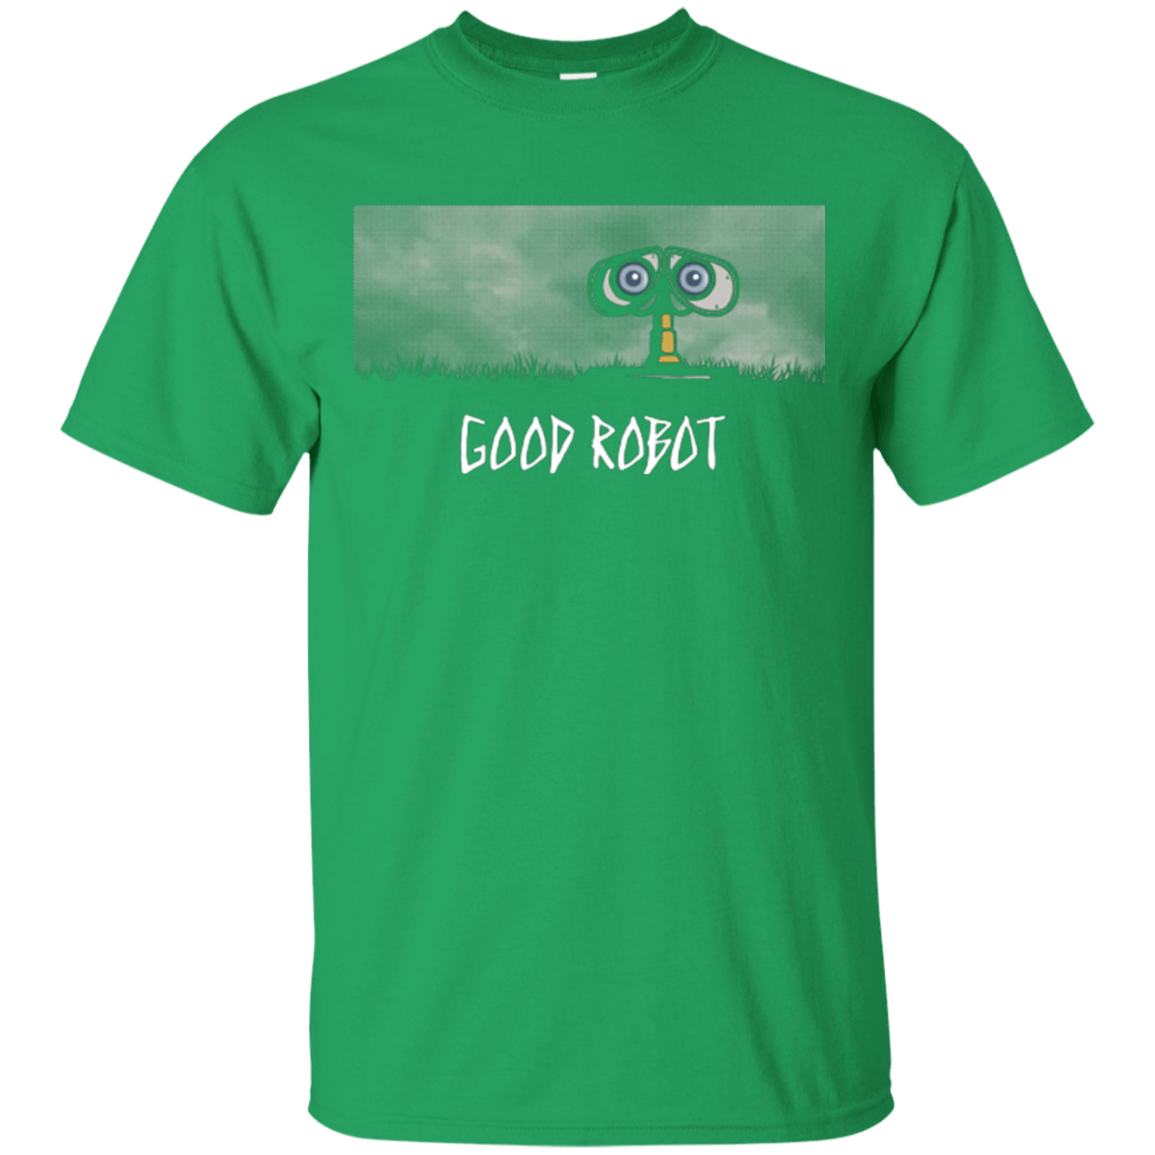 T-Shirts Irish Green / Small GOOD ROBOT T-Shirt